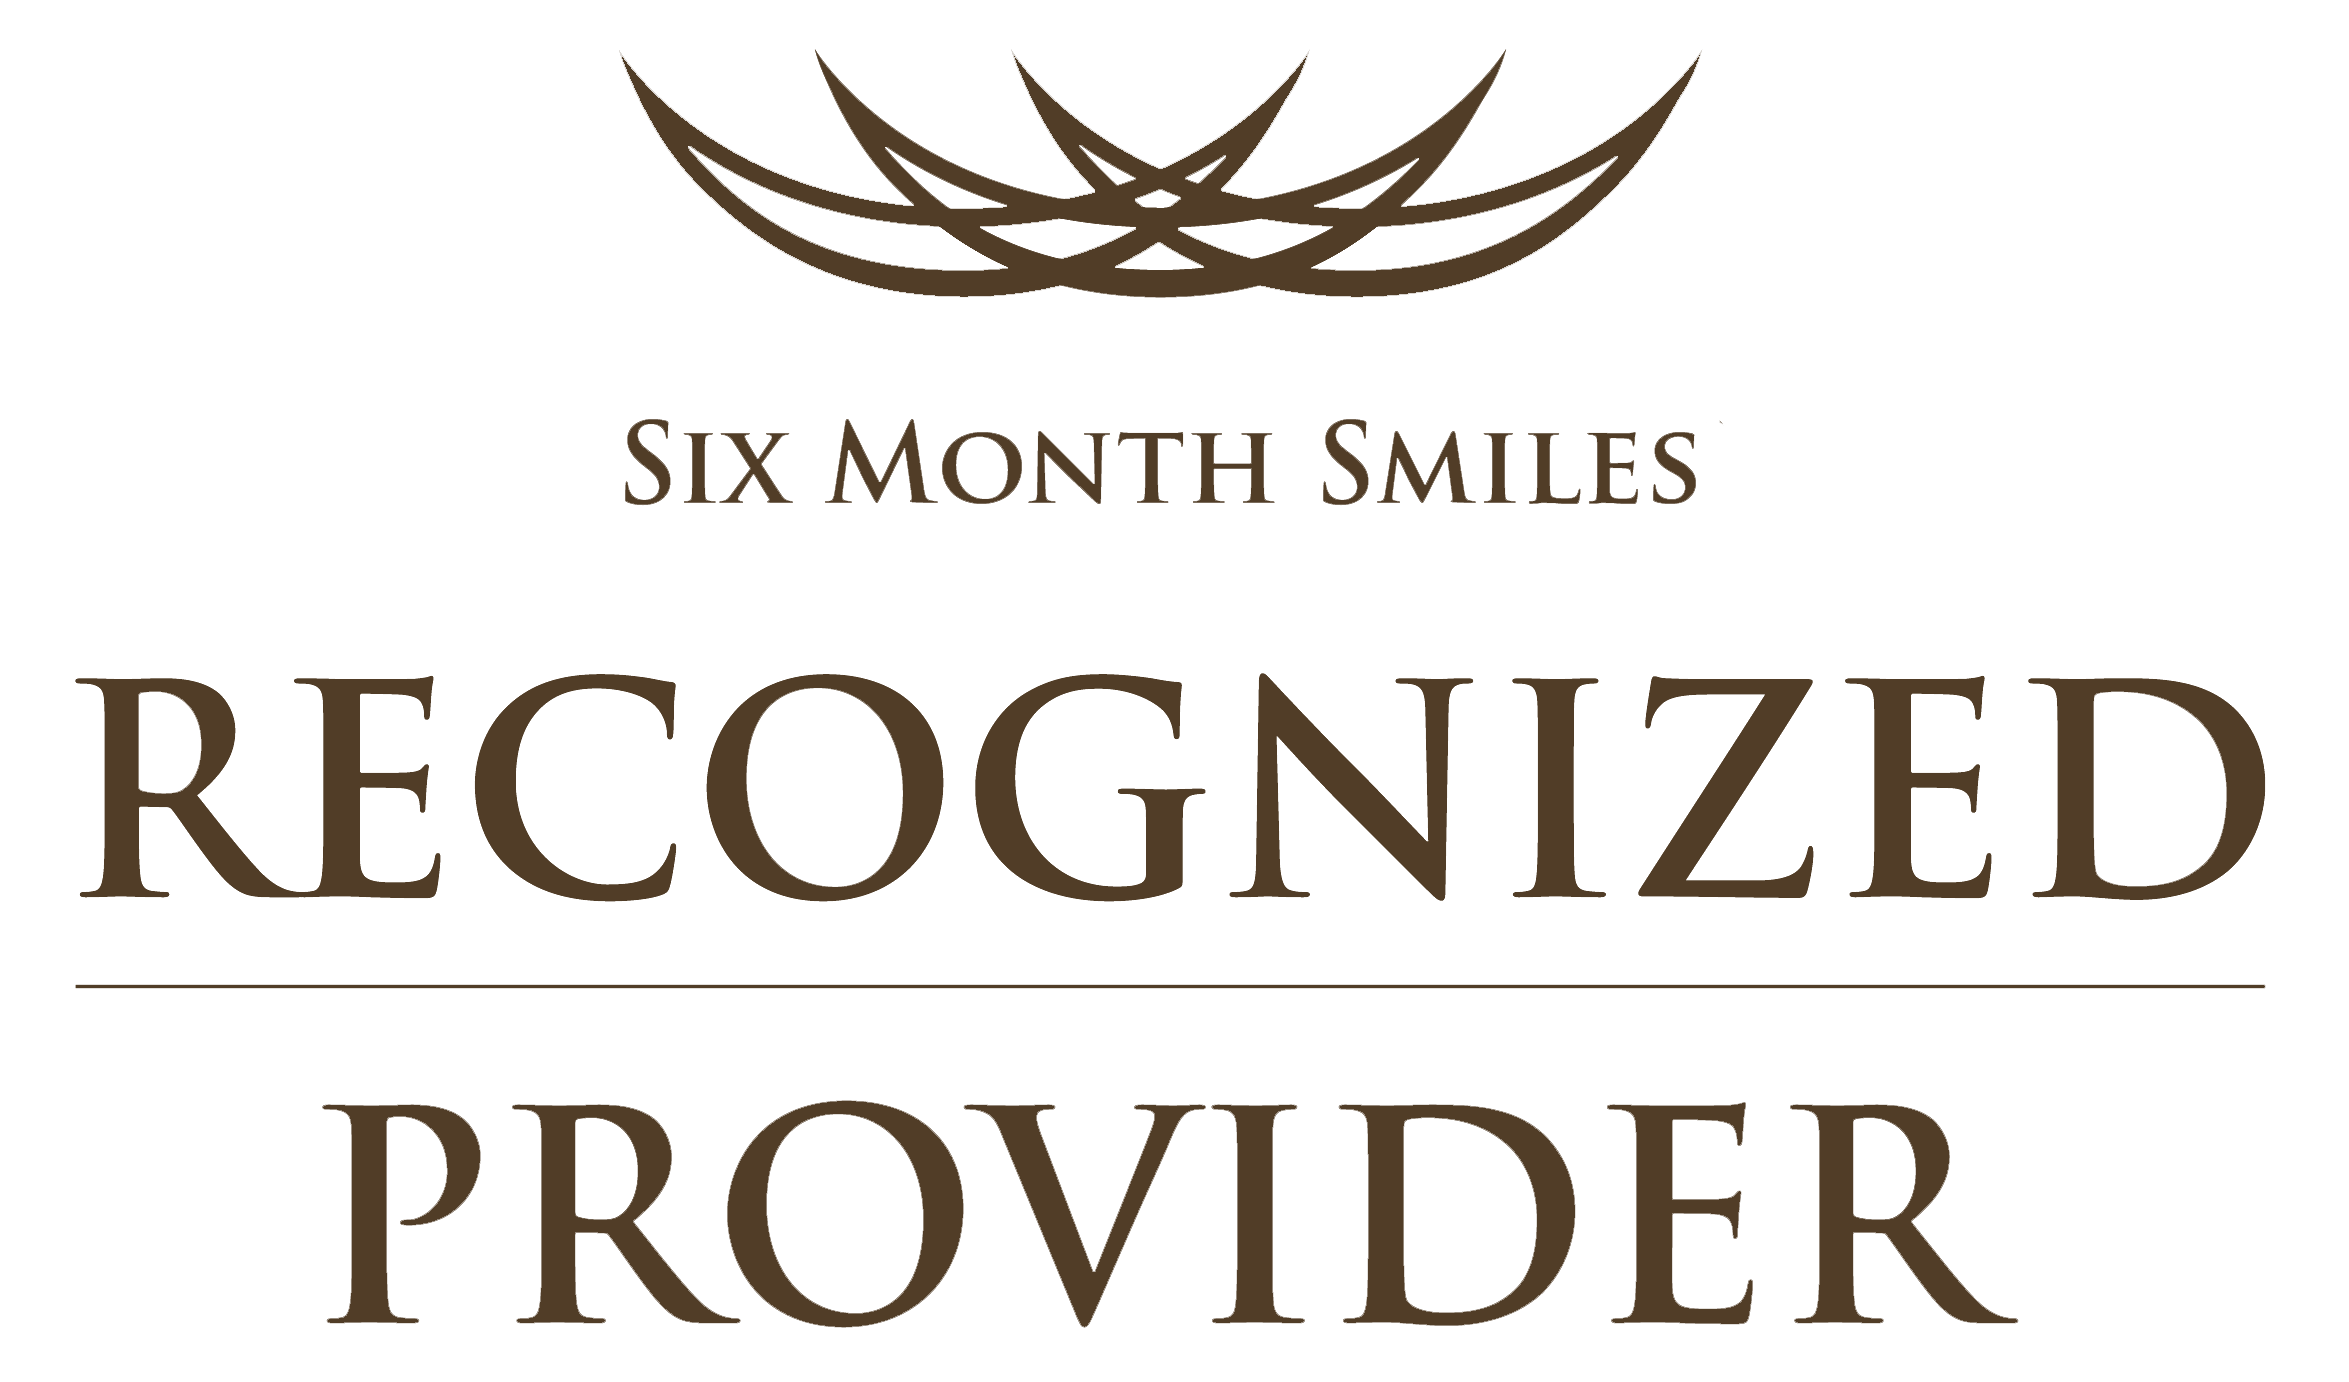 six month smiles logo 